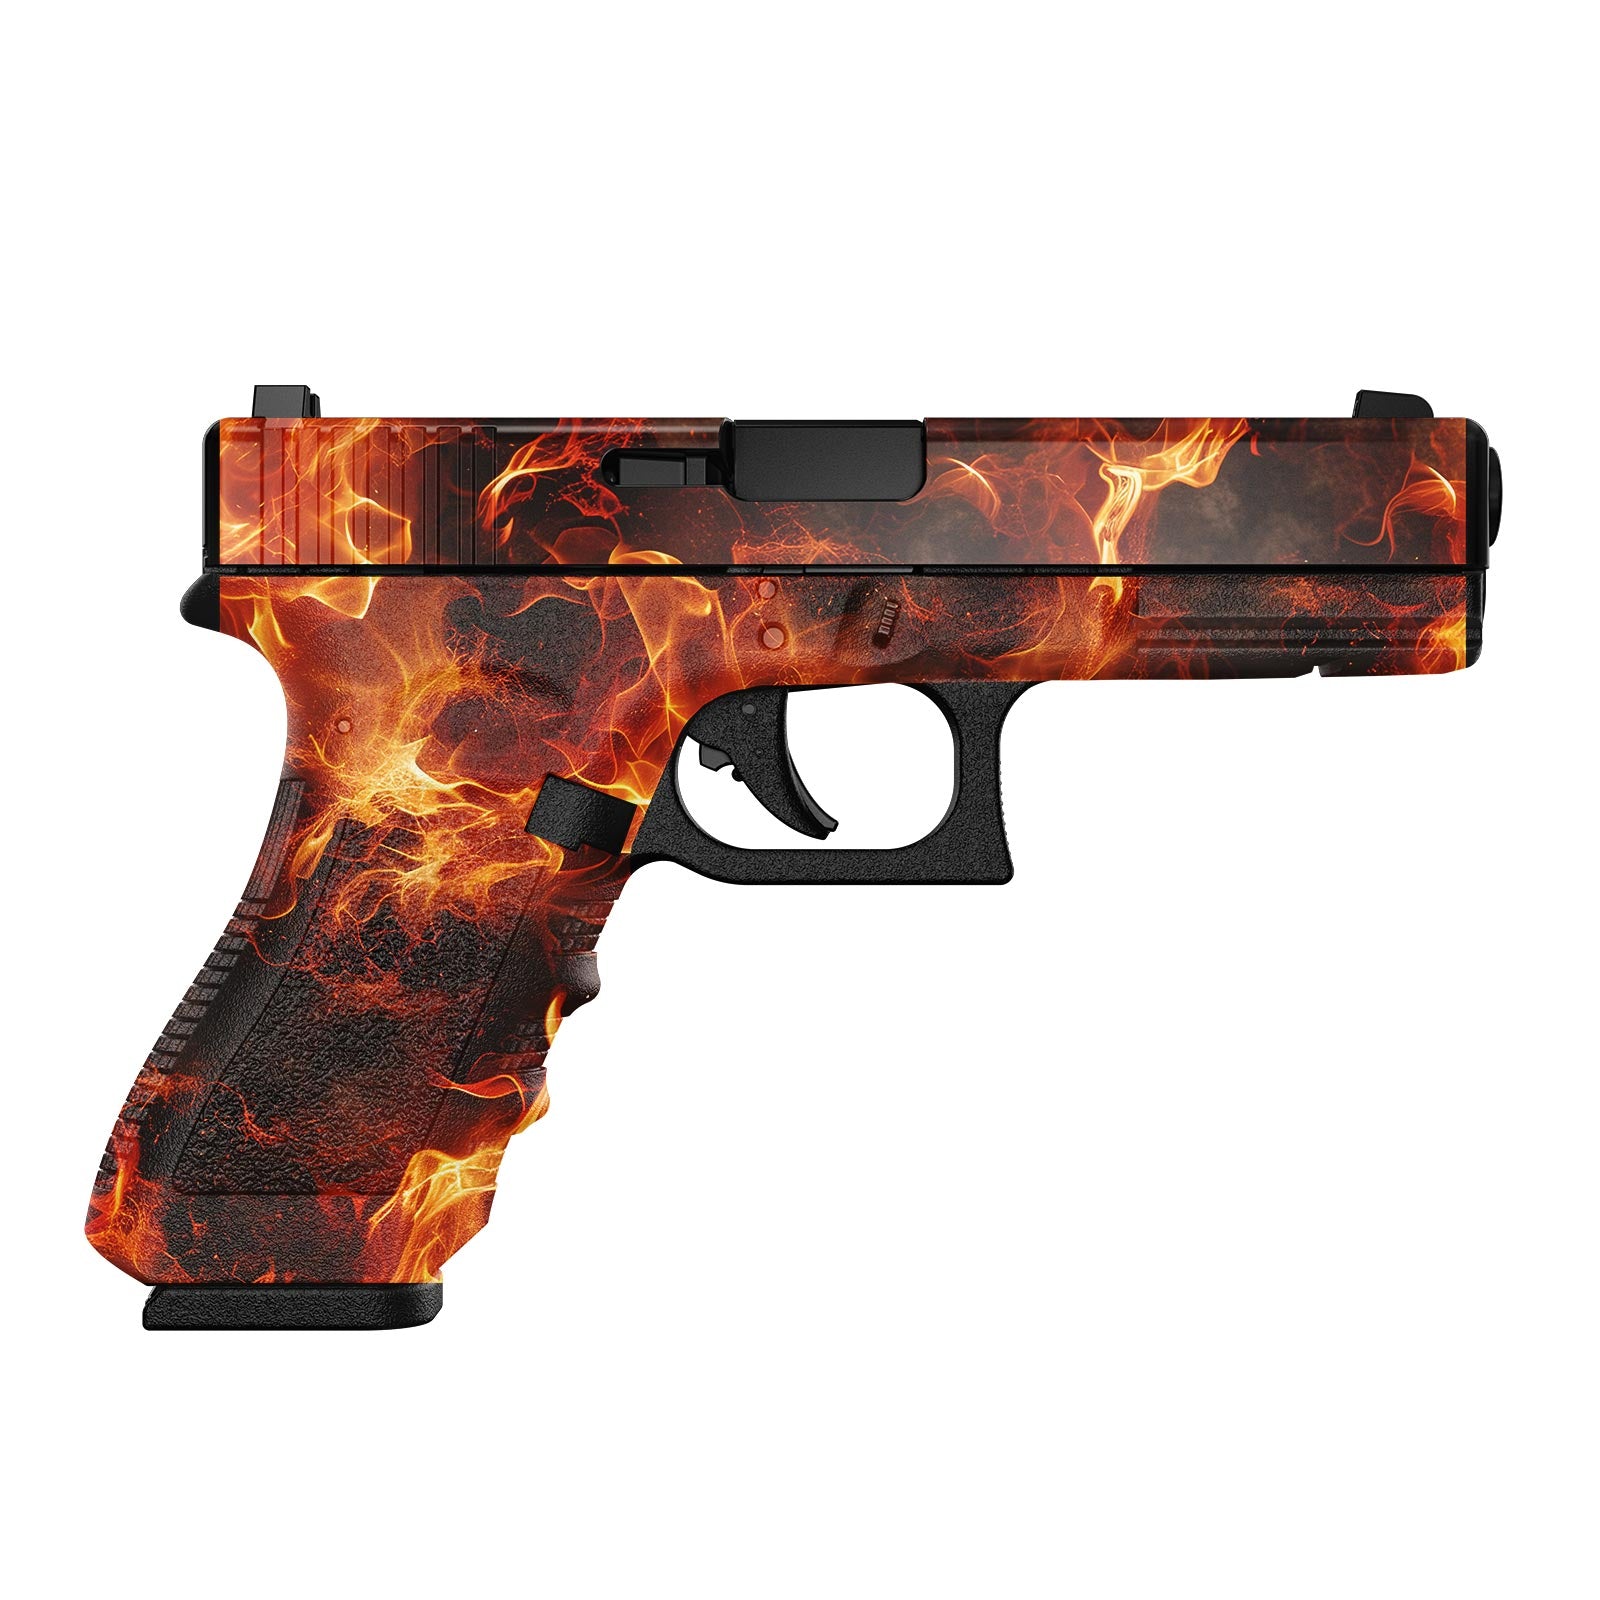 Universal Gun Skin - Fire